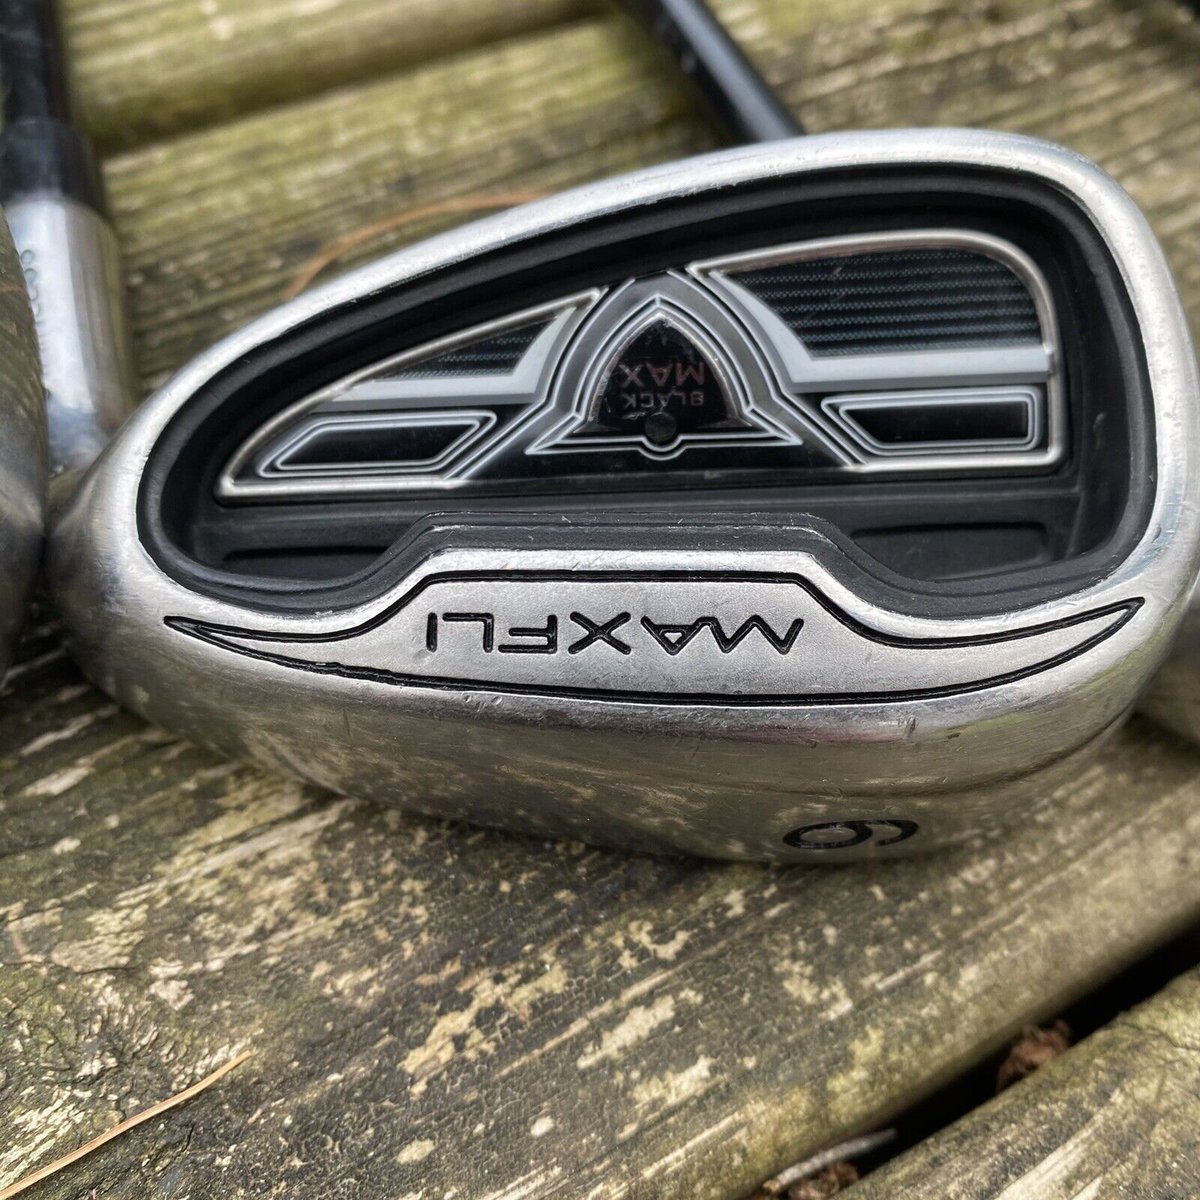 MaxFli Black Max Iron Set 5-PW A Flex Mid Kick 58 g RH

ebay.com/itm/2047677851… 

#eBay via @eBay #golf #MaxFli #Golfers #GolfLife #GolfDeals #GolfAddict #GolfCommunity #SportsEquipment